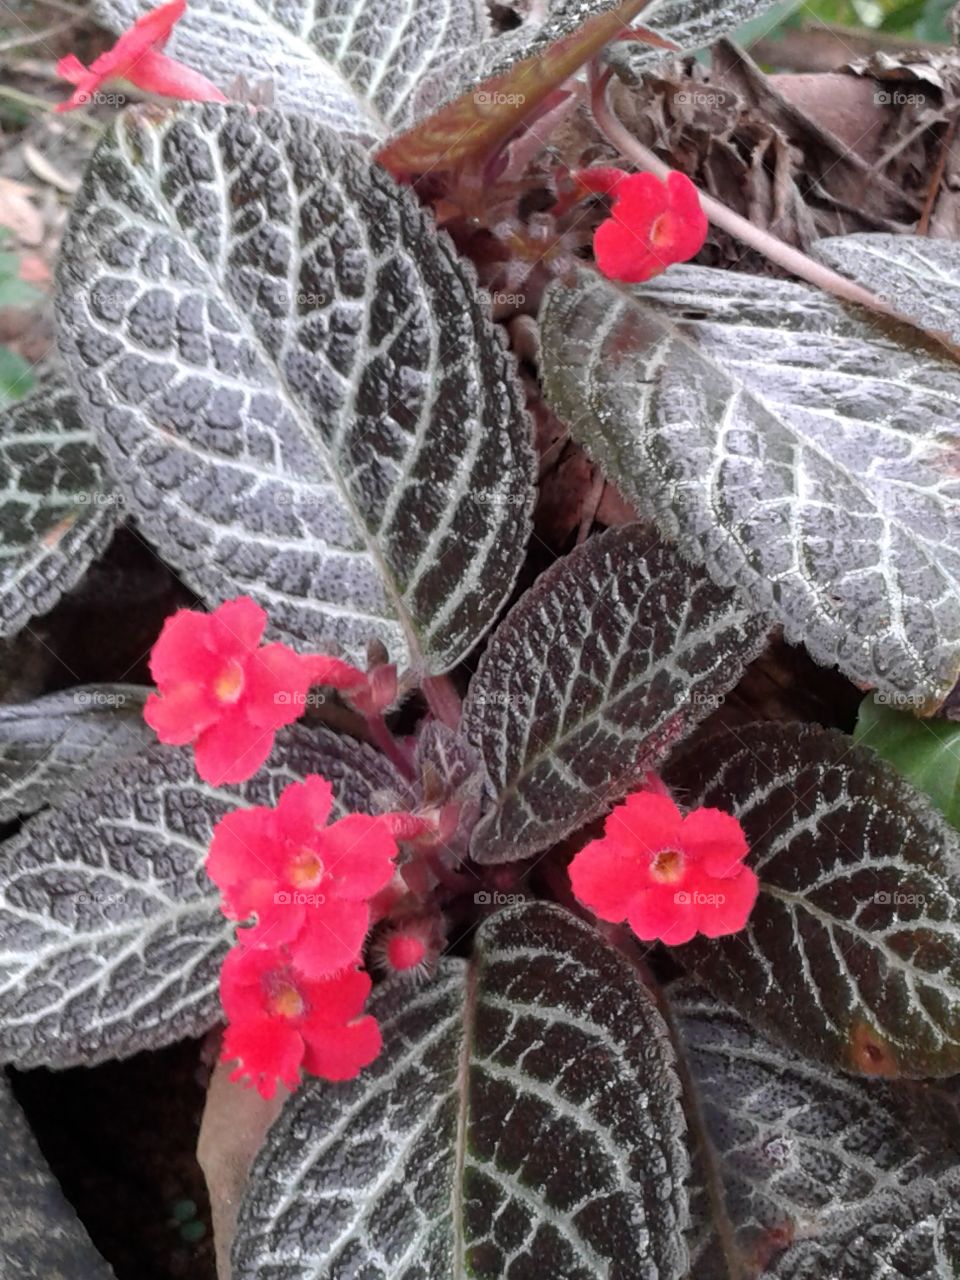 Onamental flower species